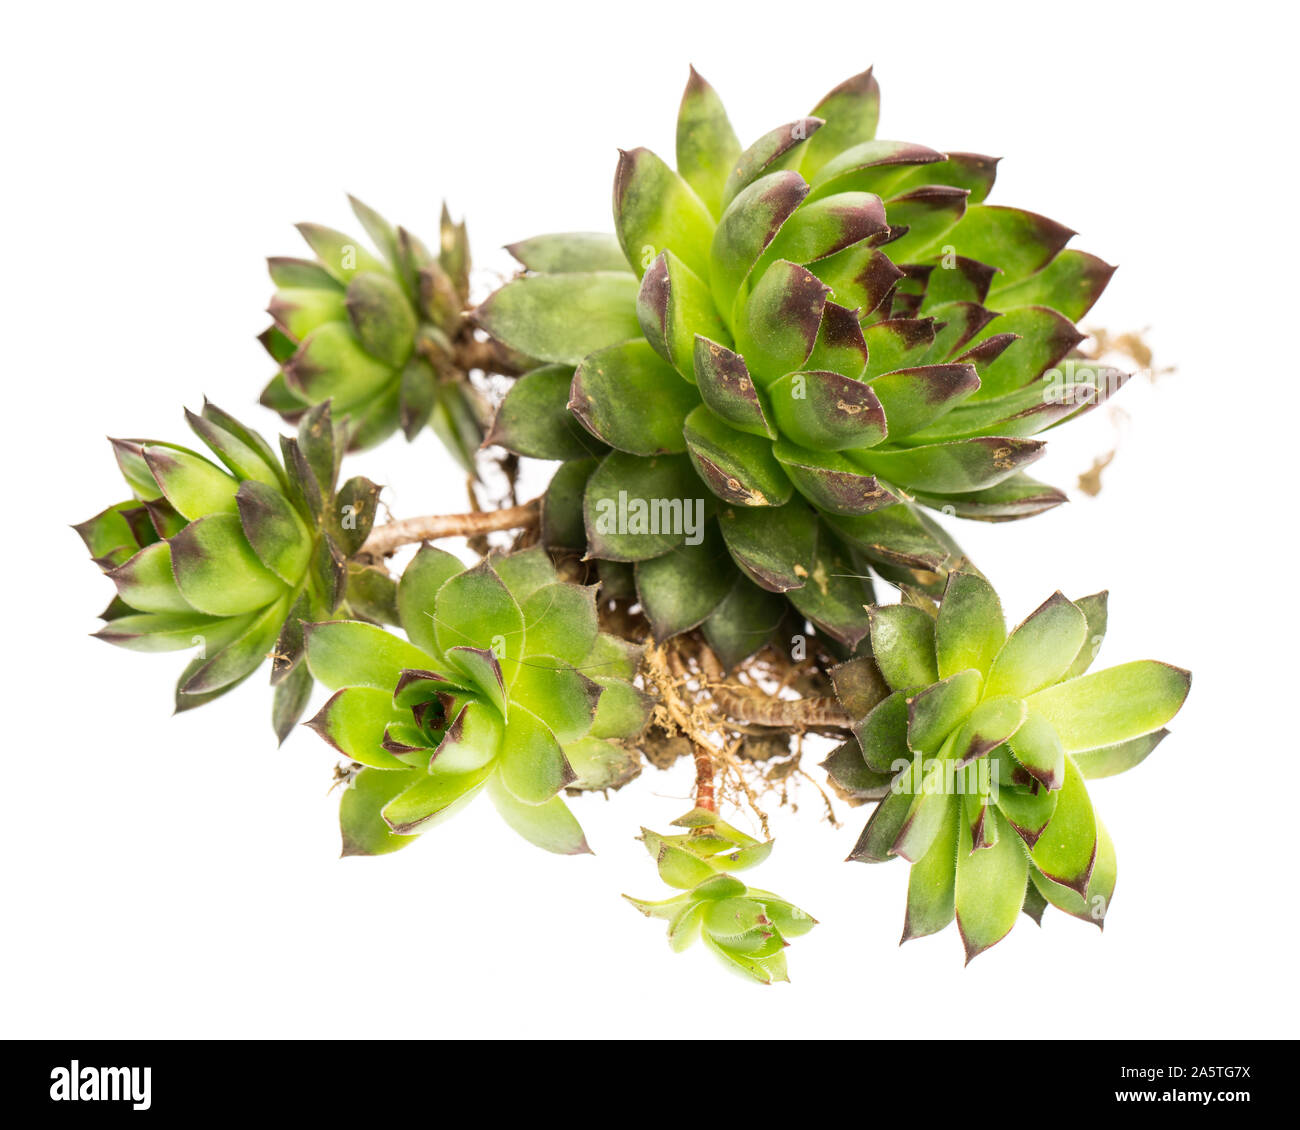 healing plants: Houseleek (Sempervivum) with many stems Stock Photo